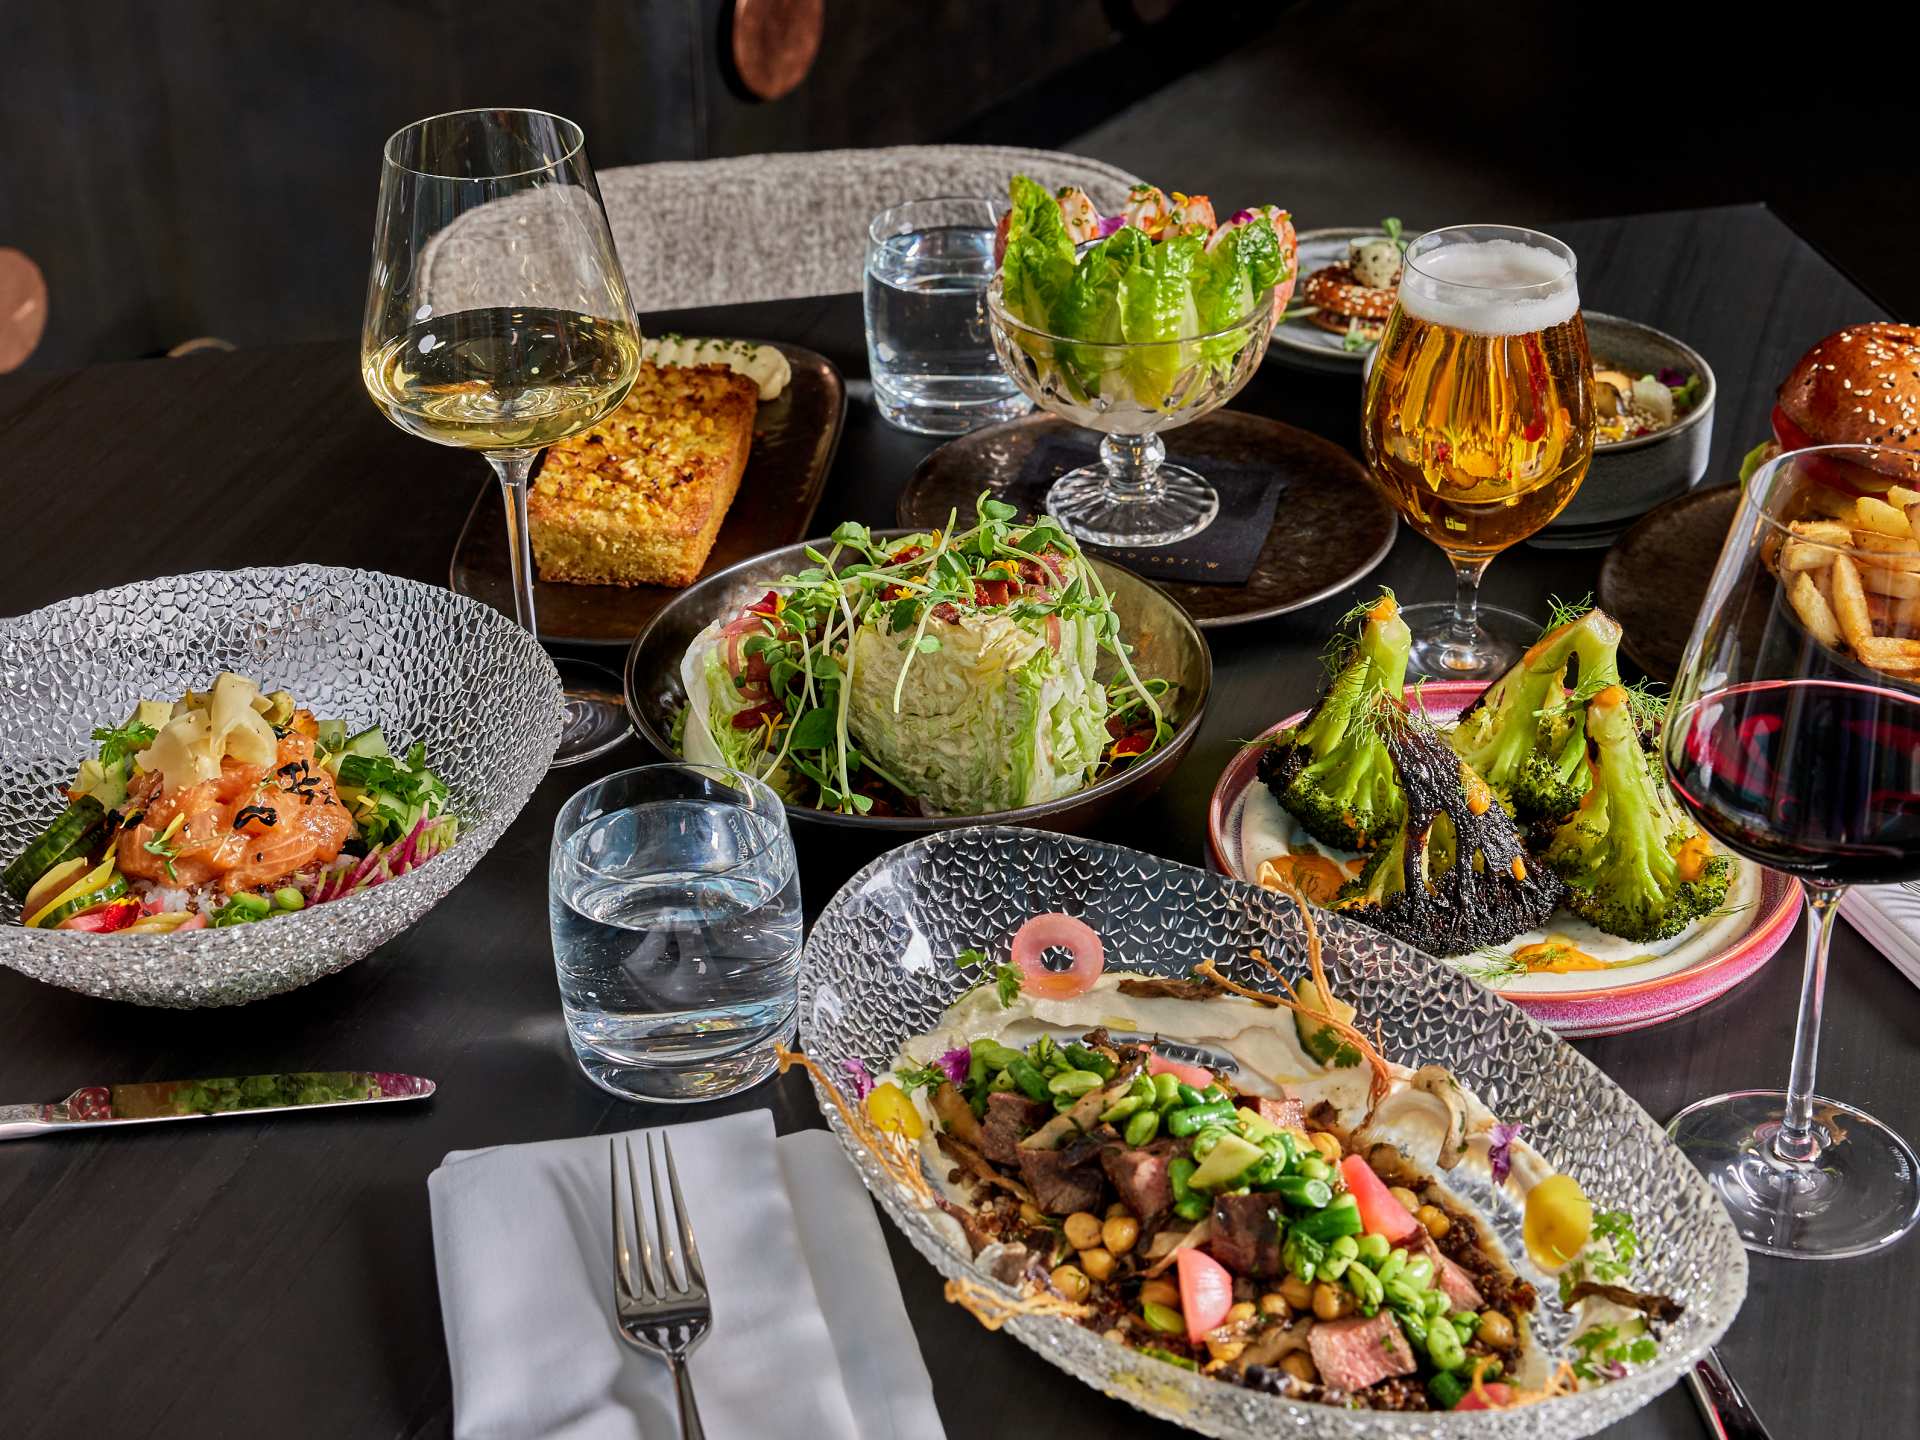 Aera restaurant | A spread of food including wedge salad, shrimp cocktail and burger